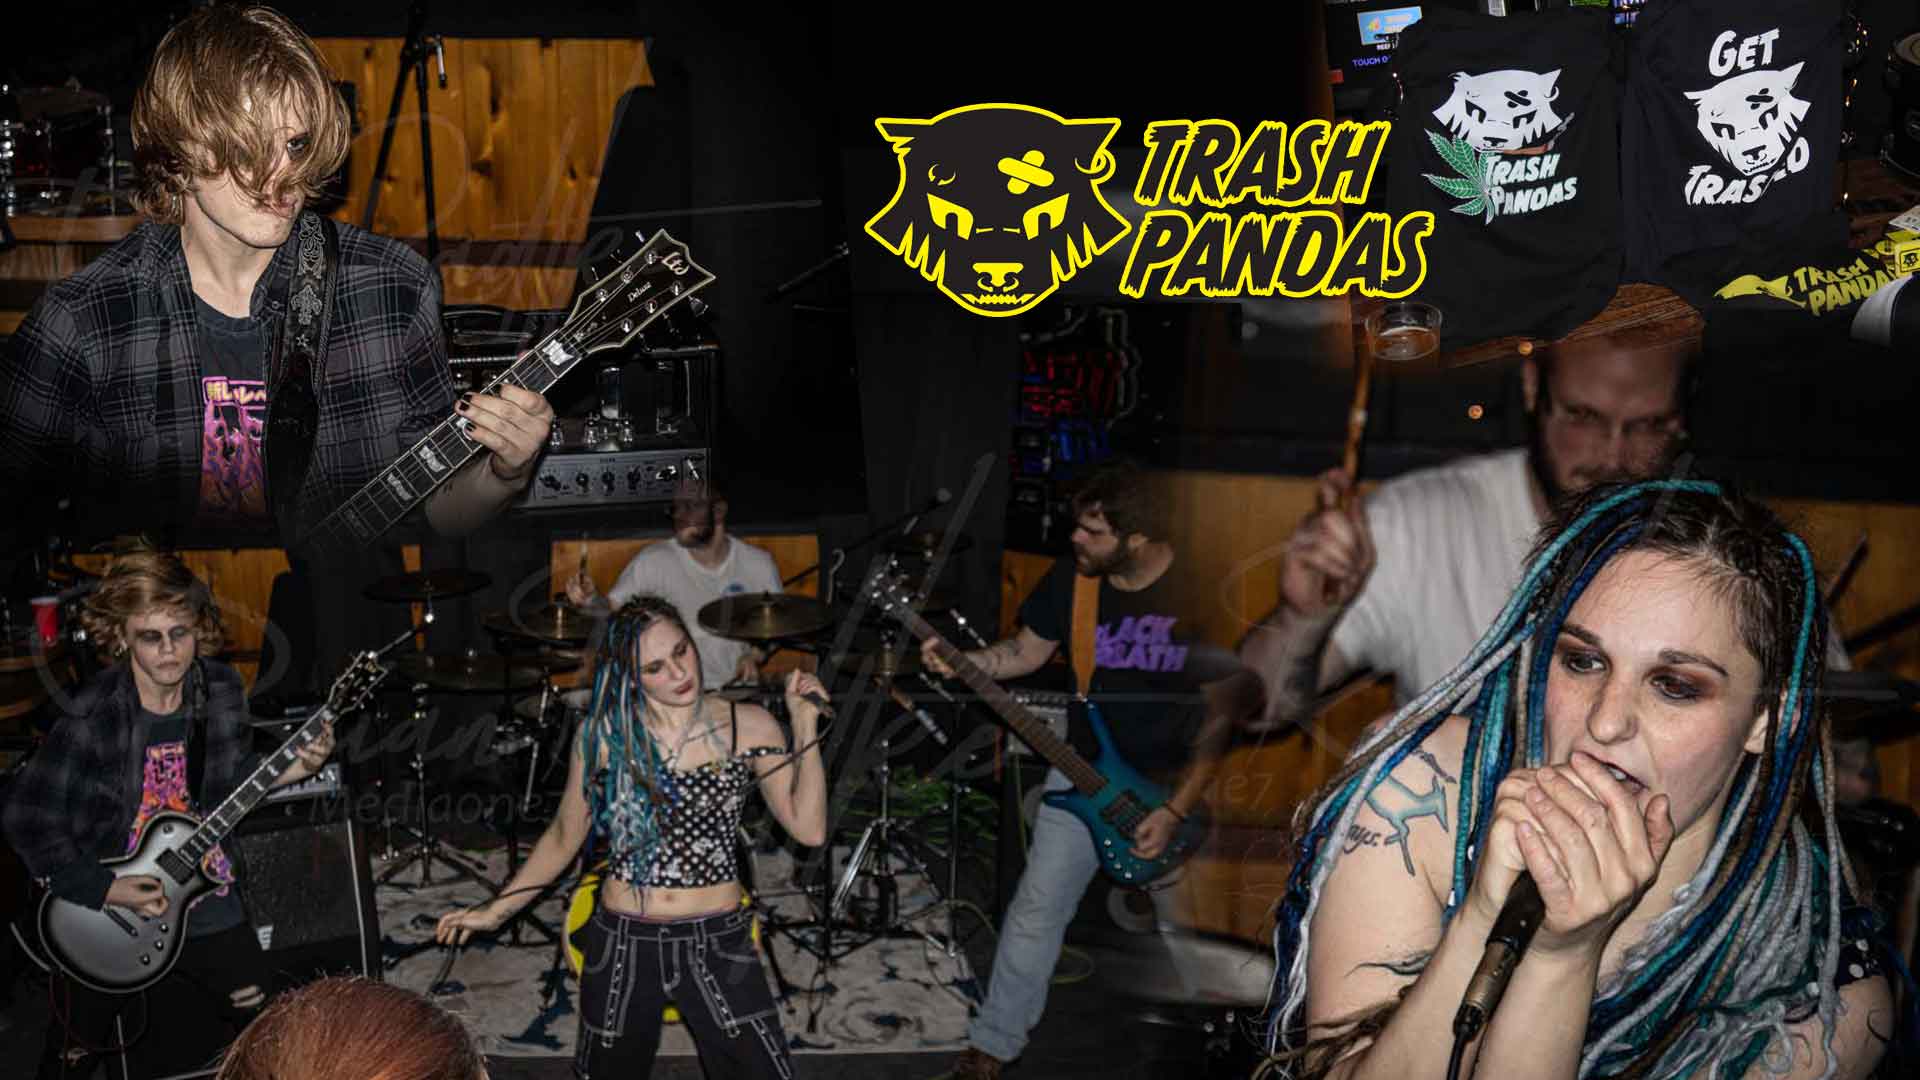 Trash Panda, Paperboy & Bud bands